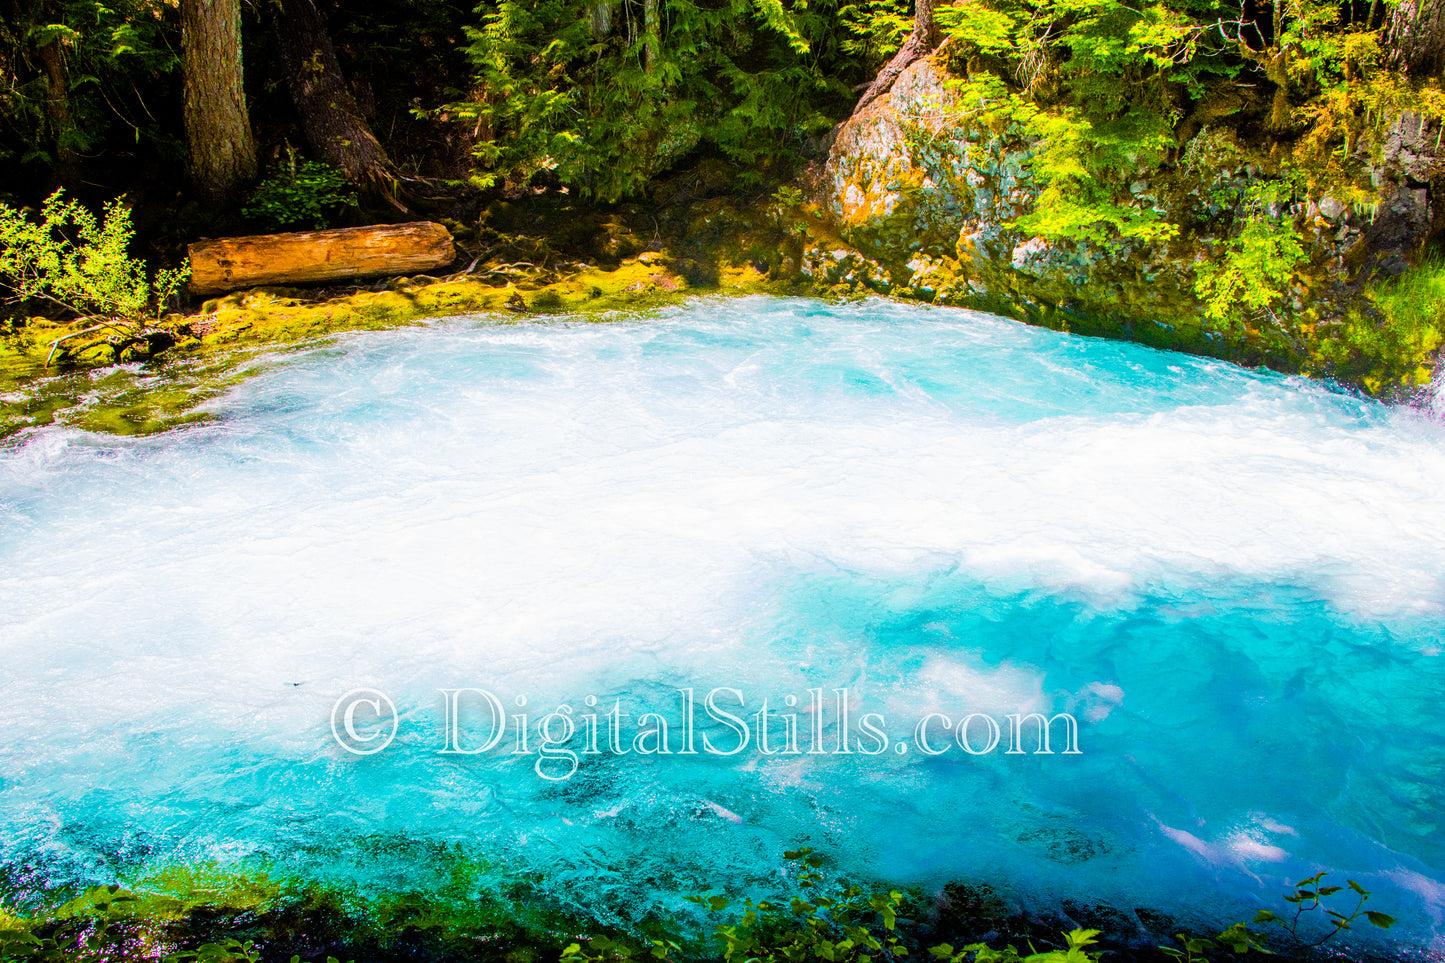 The Fresh Blue Water of Sahalie Falls